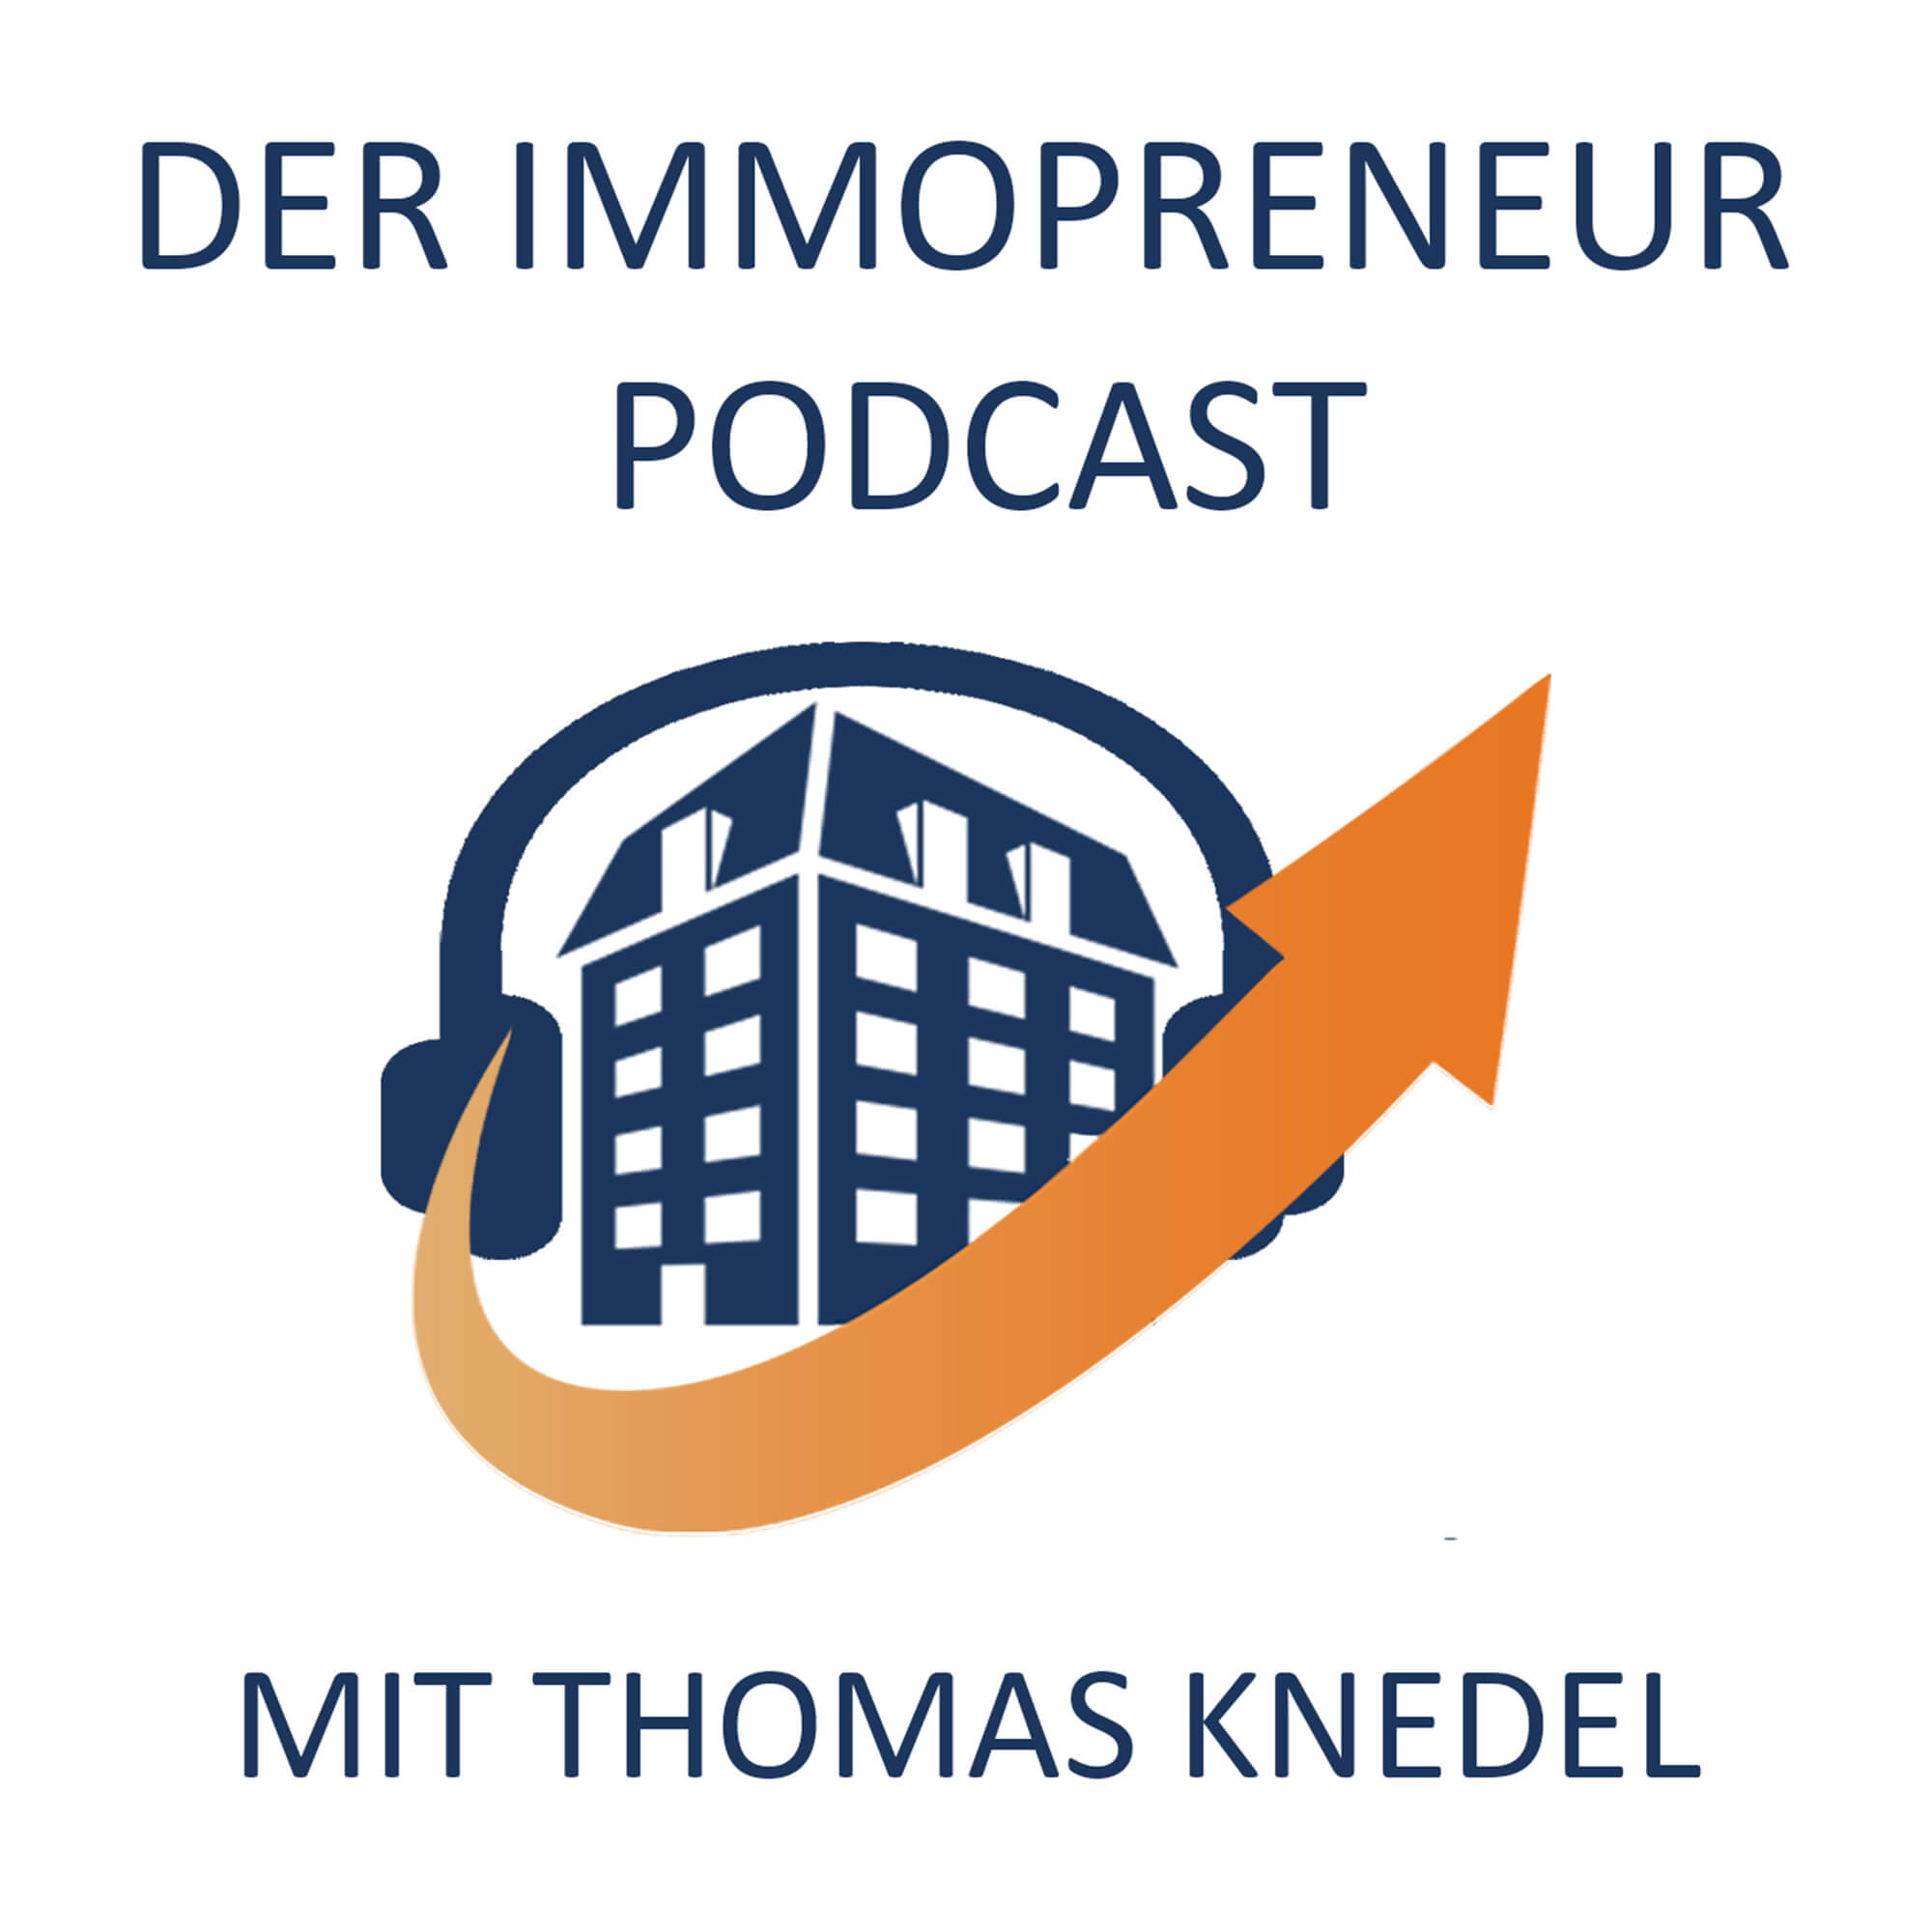 Der Immopreneur Podcast